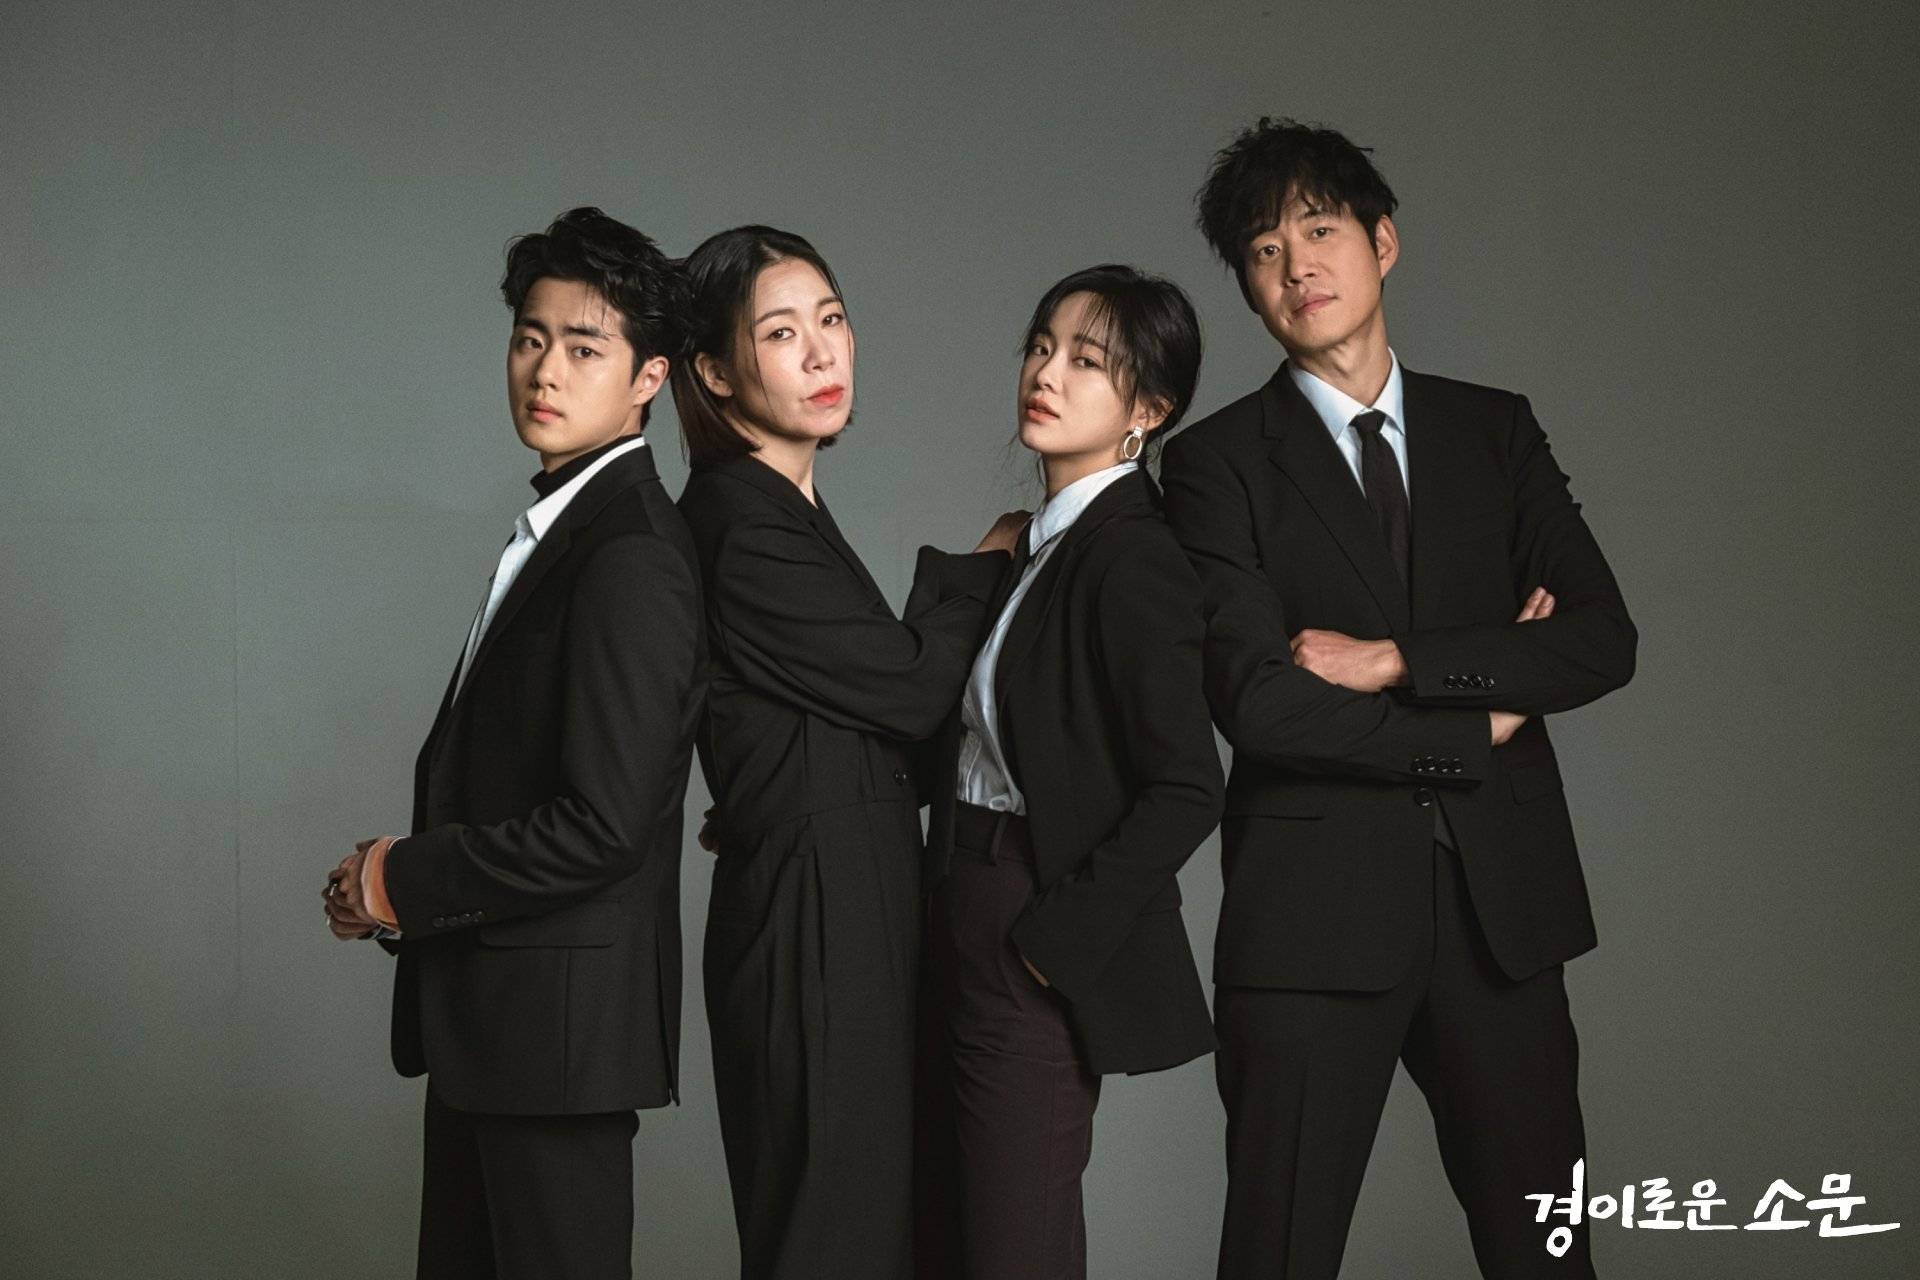 Photos Cast Photoshoot Added For The Korean Drama The Uncanny Counter Hancinema 7177